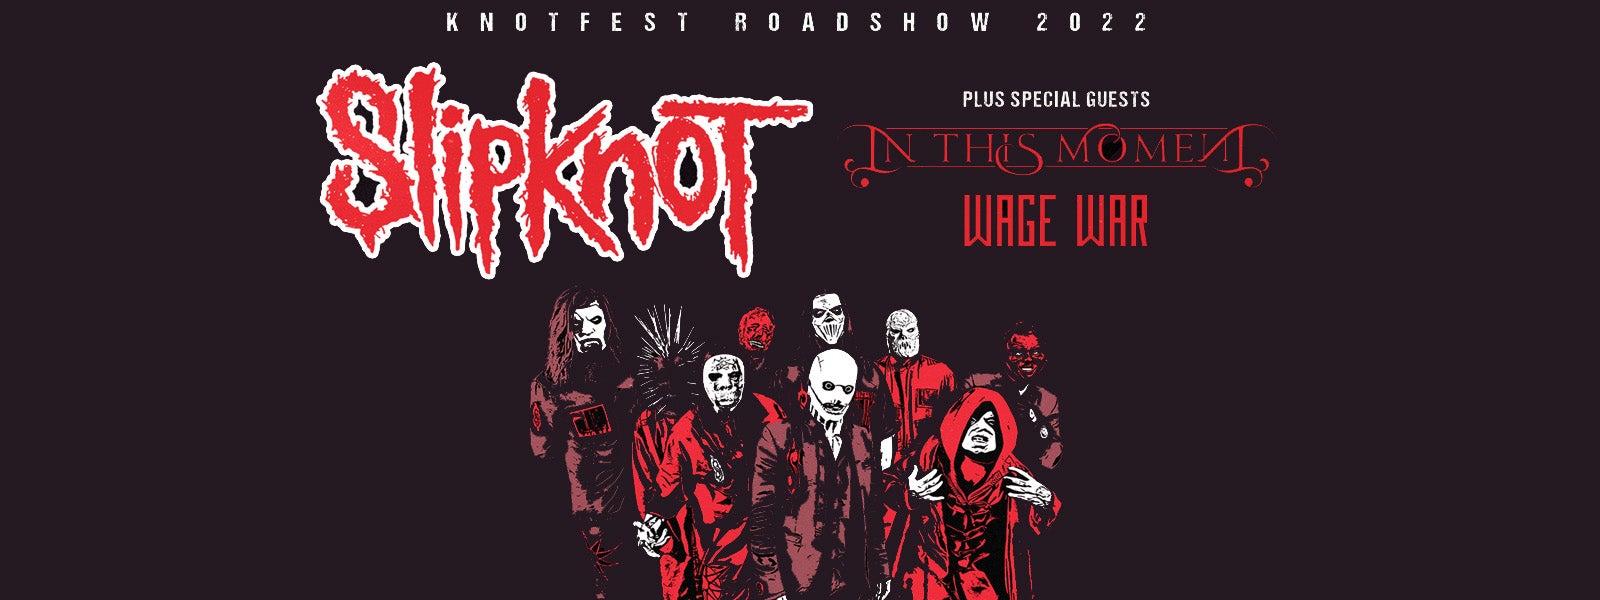 Knotfest Roadshow